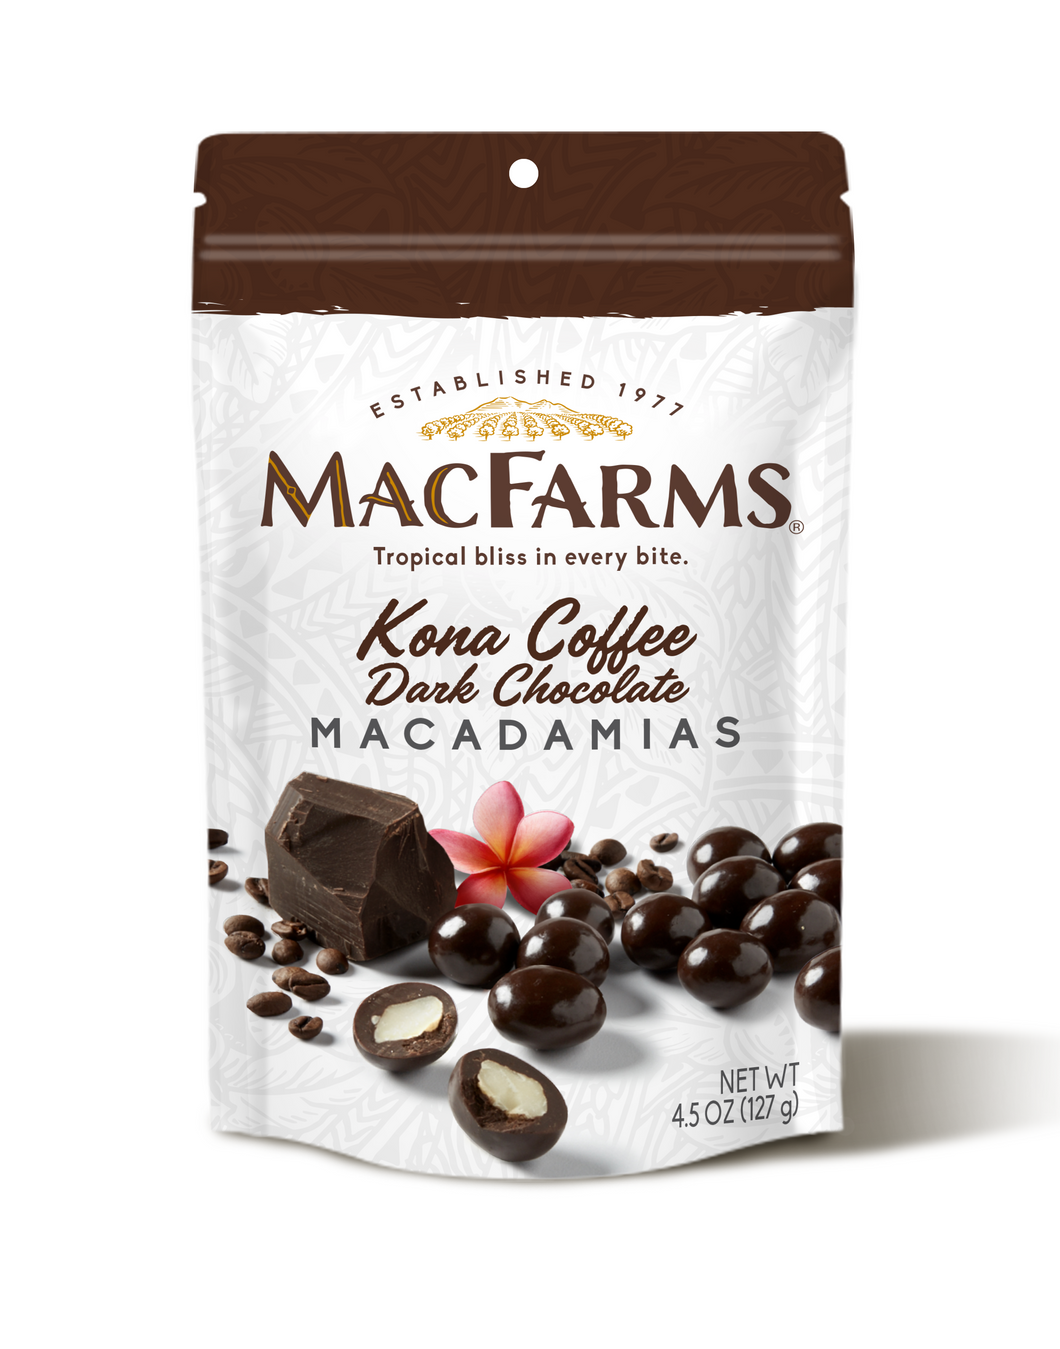 Kona Coffee - Dark Chocolate